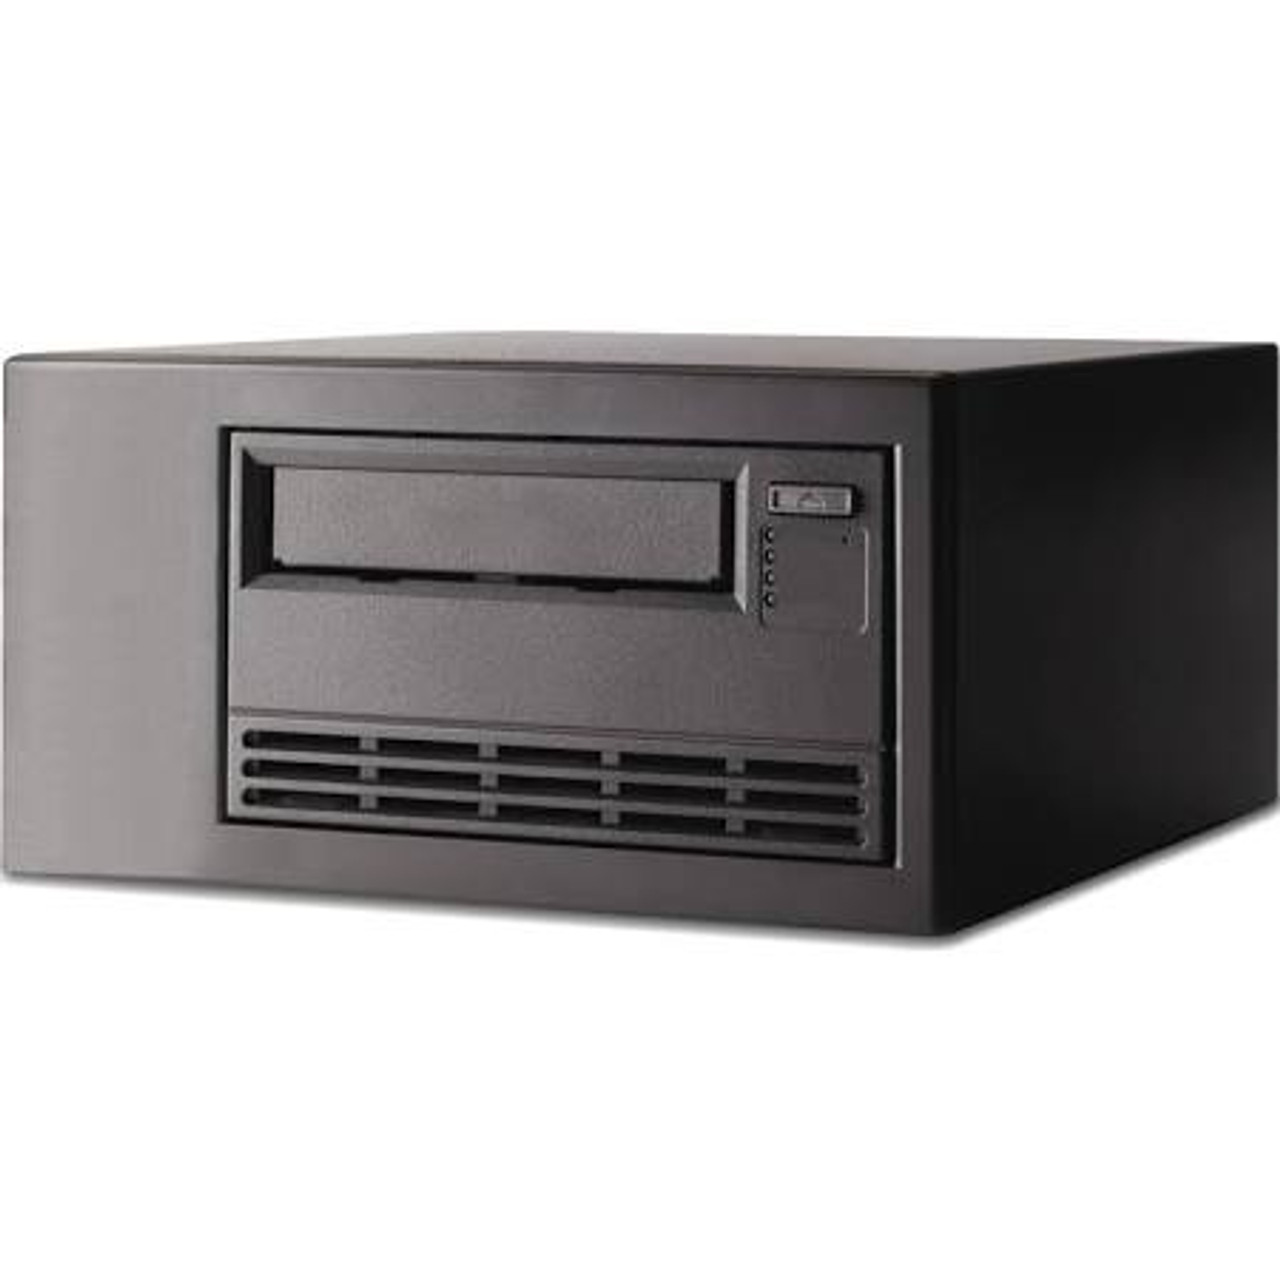 0T1452 - Dell DLT VS80 Tape Drive - 40GB (Native)/80GB (Compressed) - SCSI - 5.25 1/2H Internal